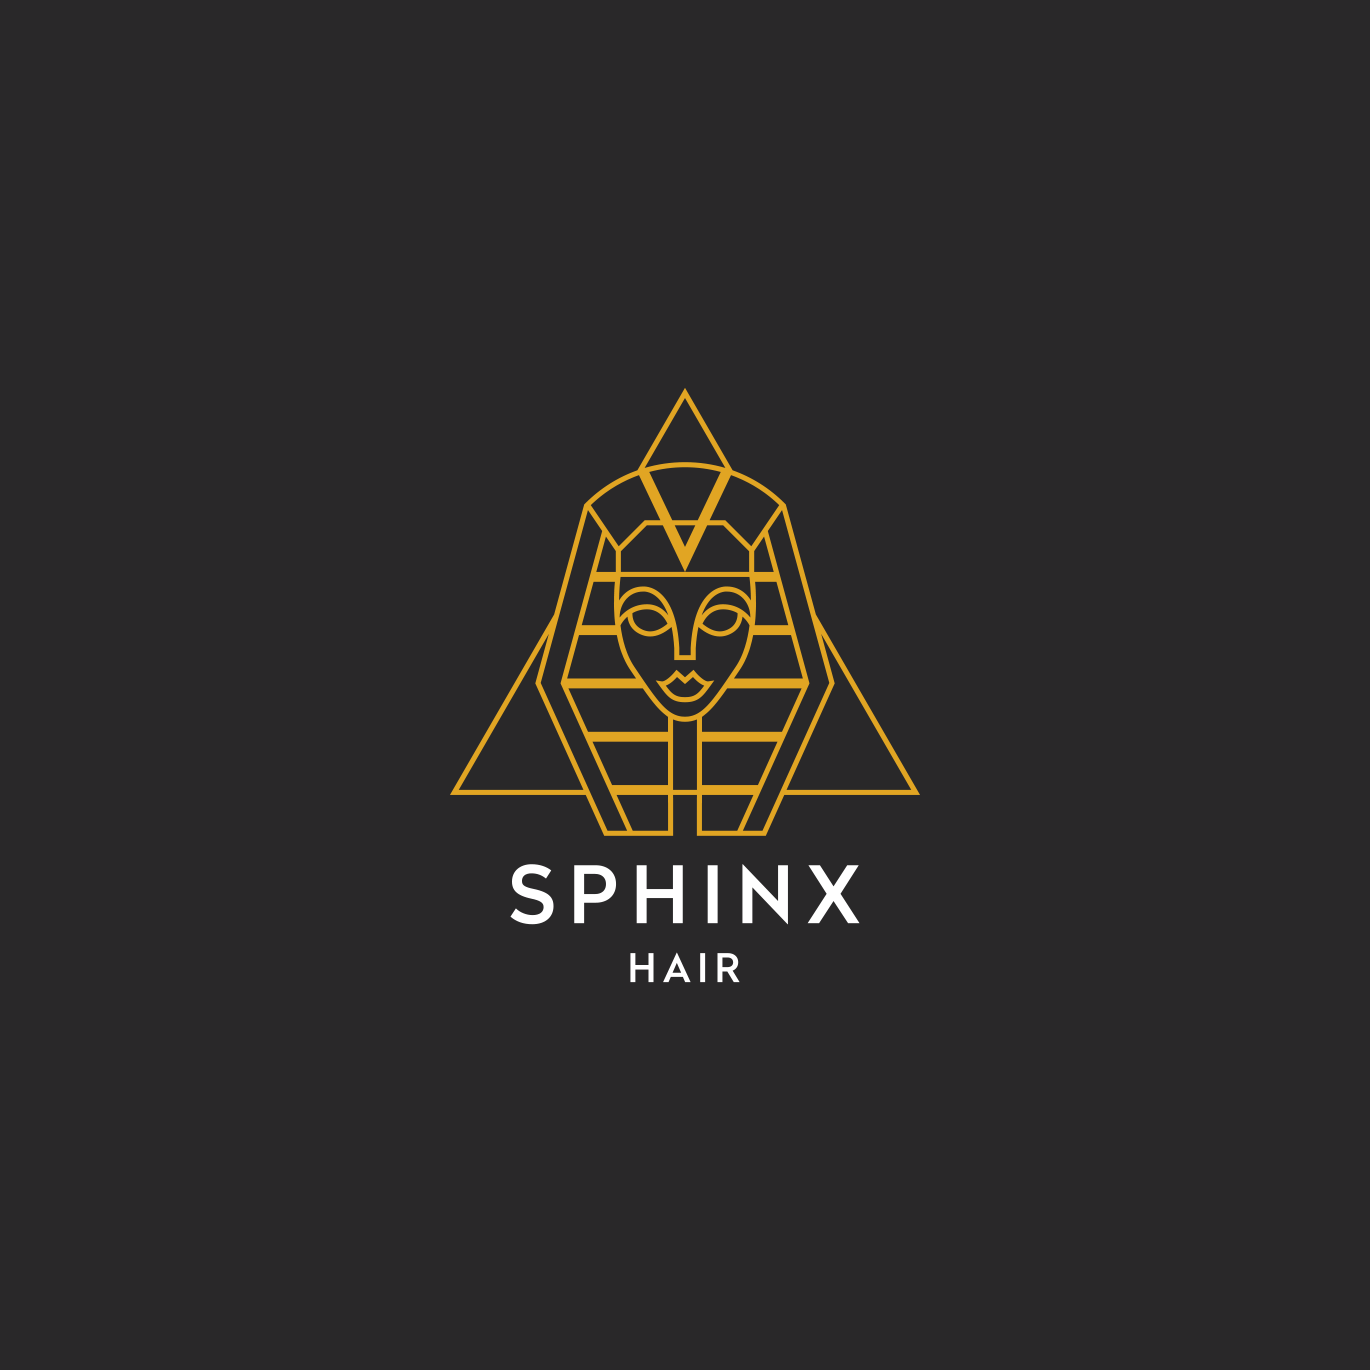 Sphinx Logo - Squeeze Creative Logos Sphinx Hair